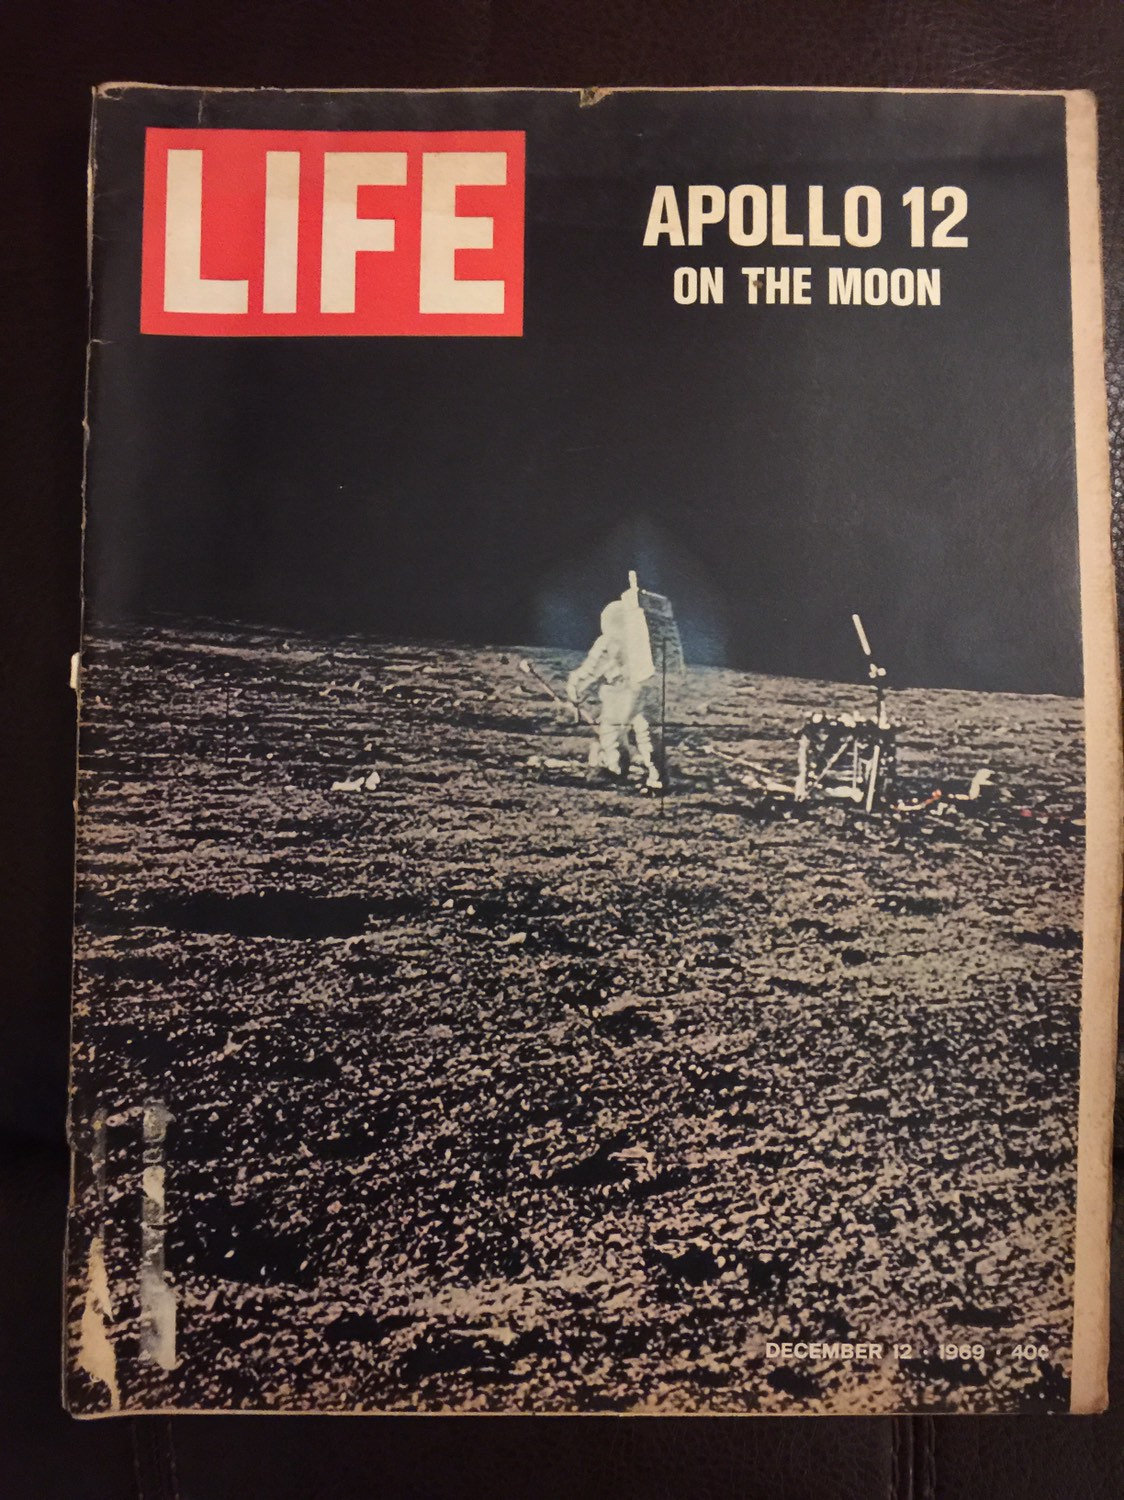 LIFE Magazine - December 12, 1969